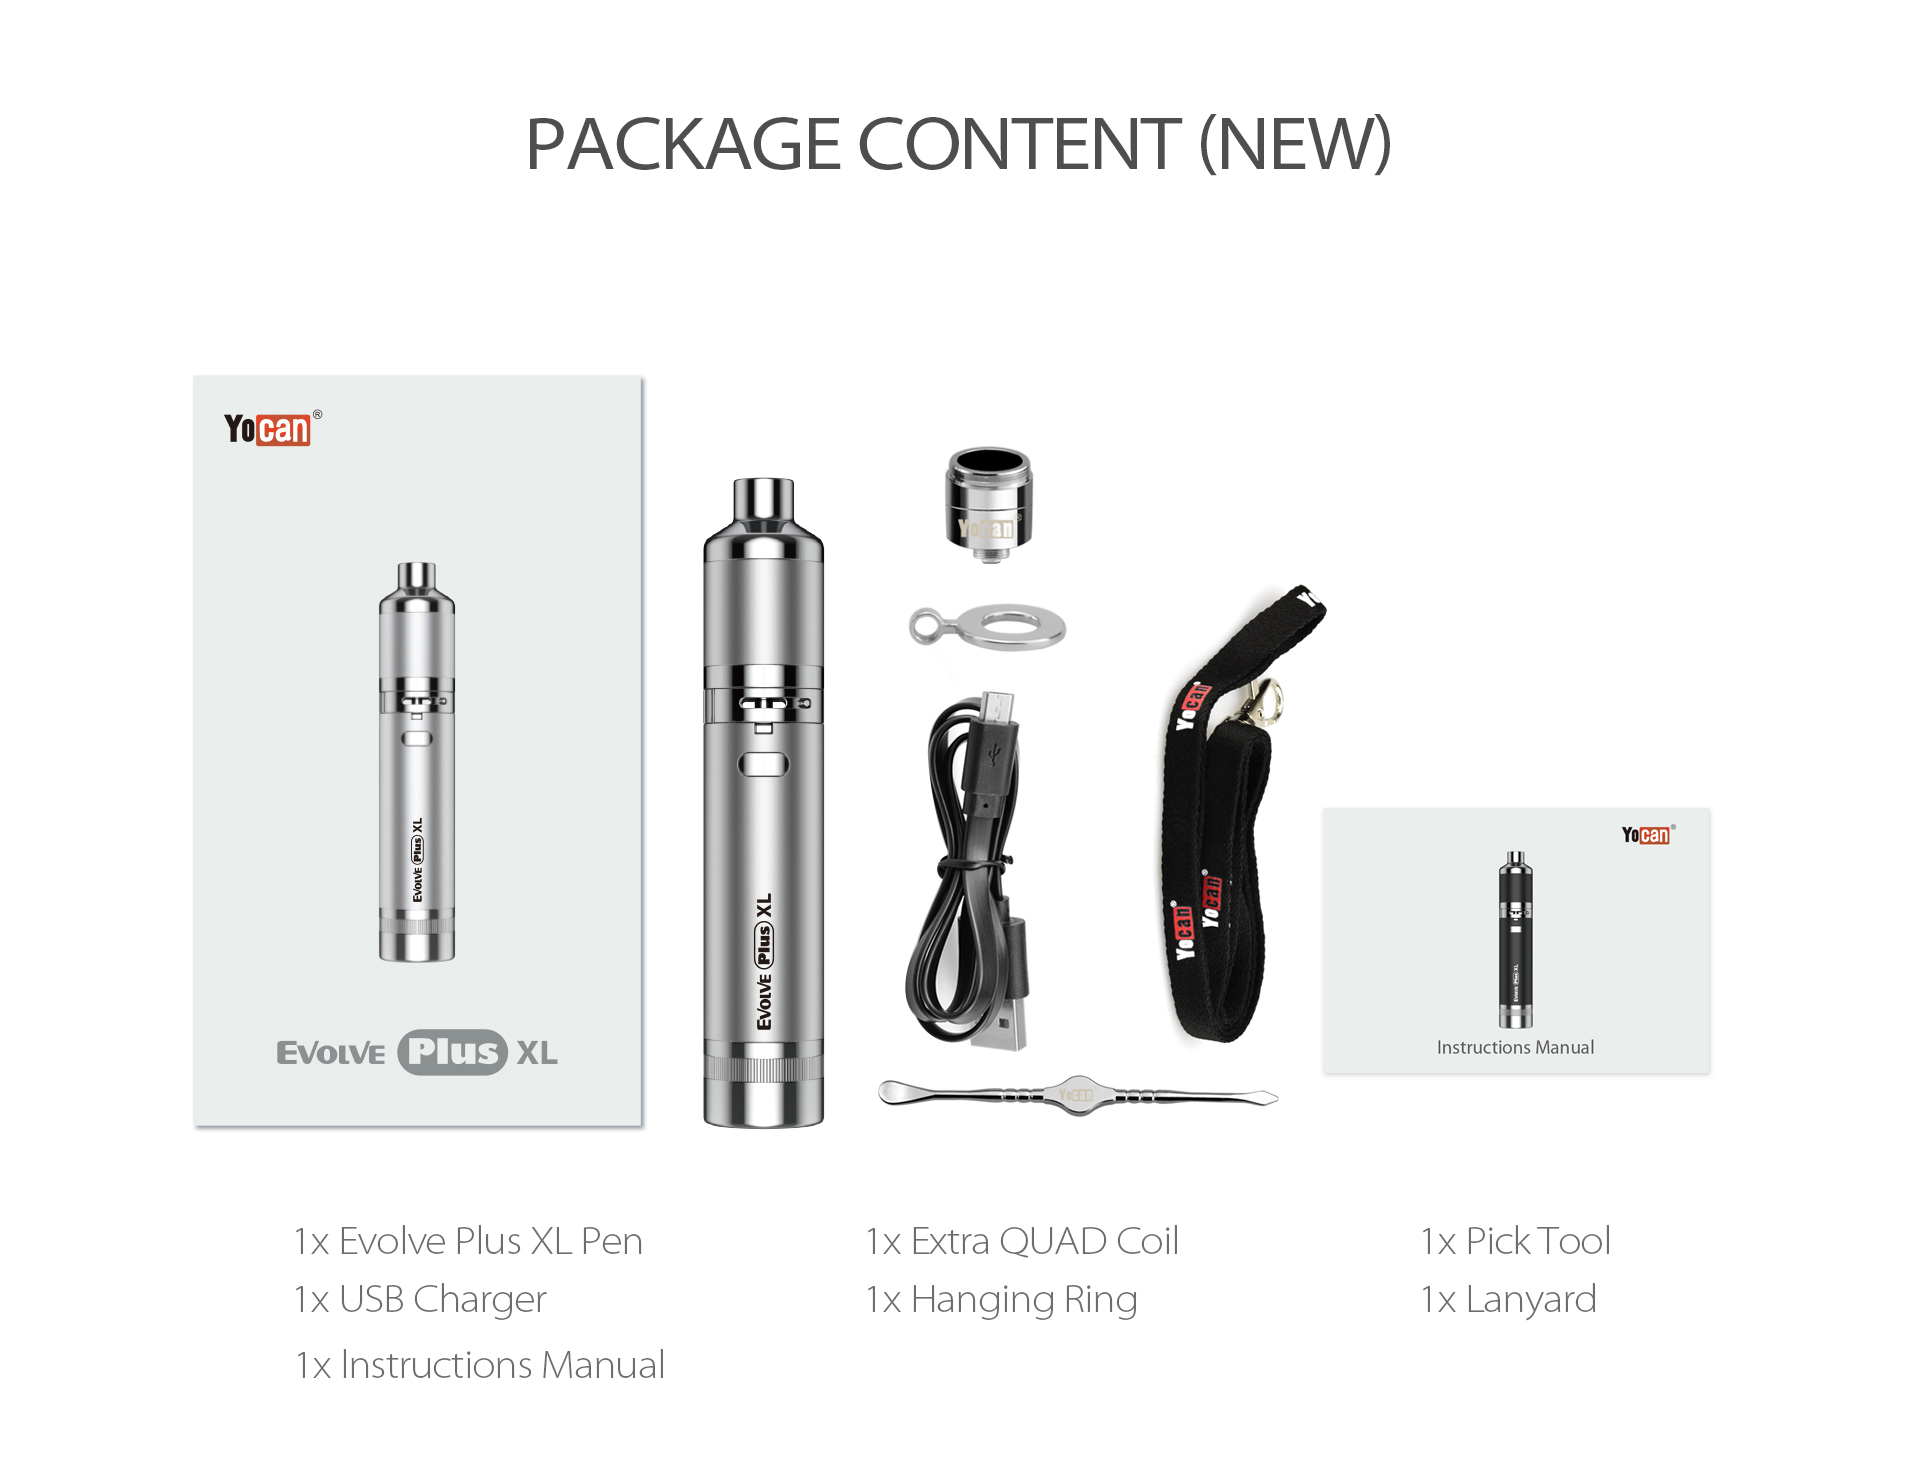 Yocan Evolve Plus XL Vaporizer Package Content.